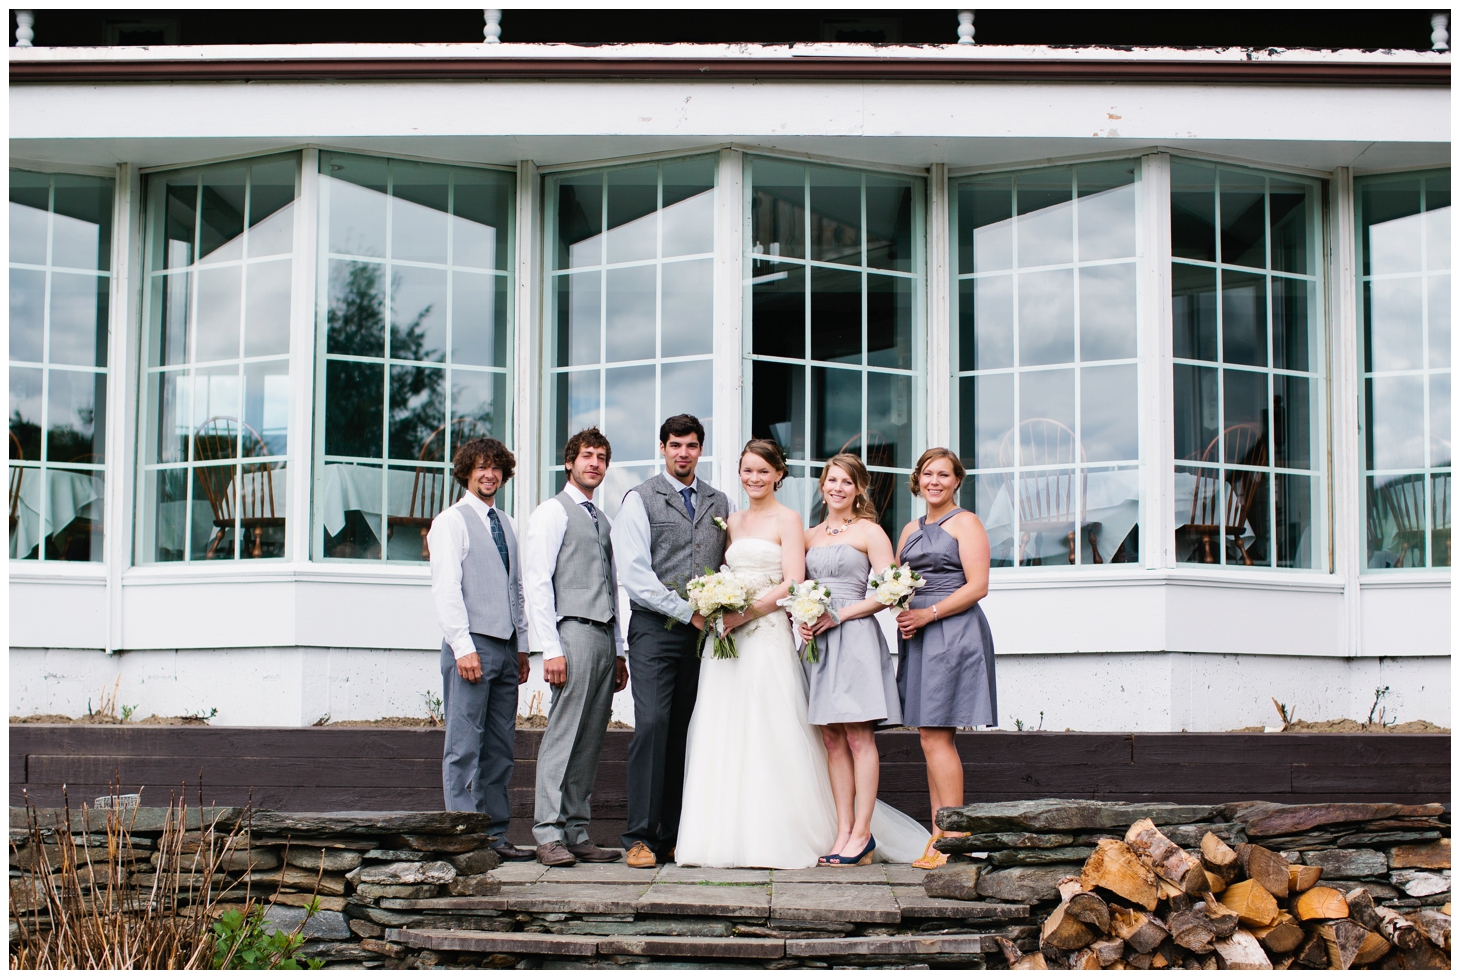 Kris & Christine's Mountain-Inspired Vermont Lodge Wedding - by Sarah Bradshaw Photography_0036